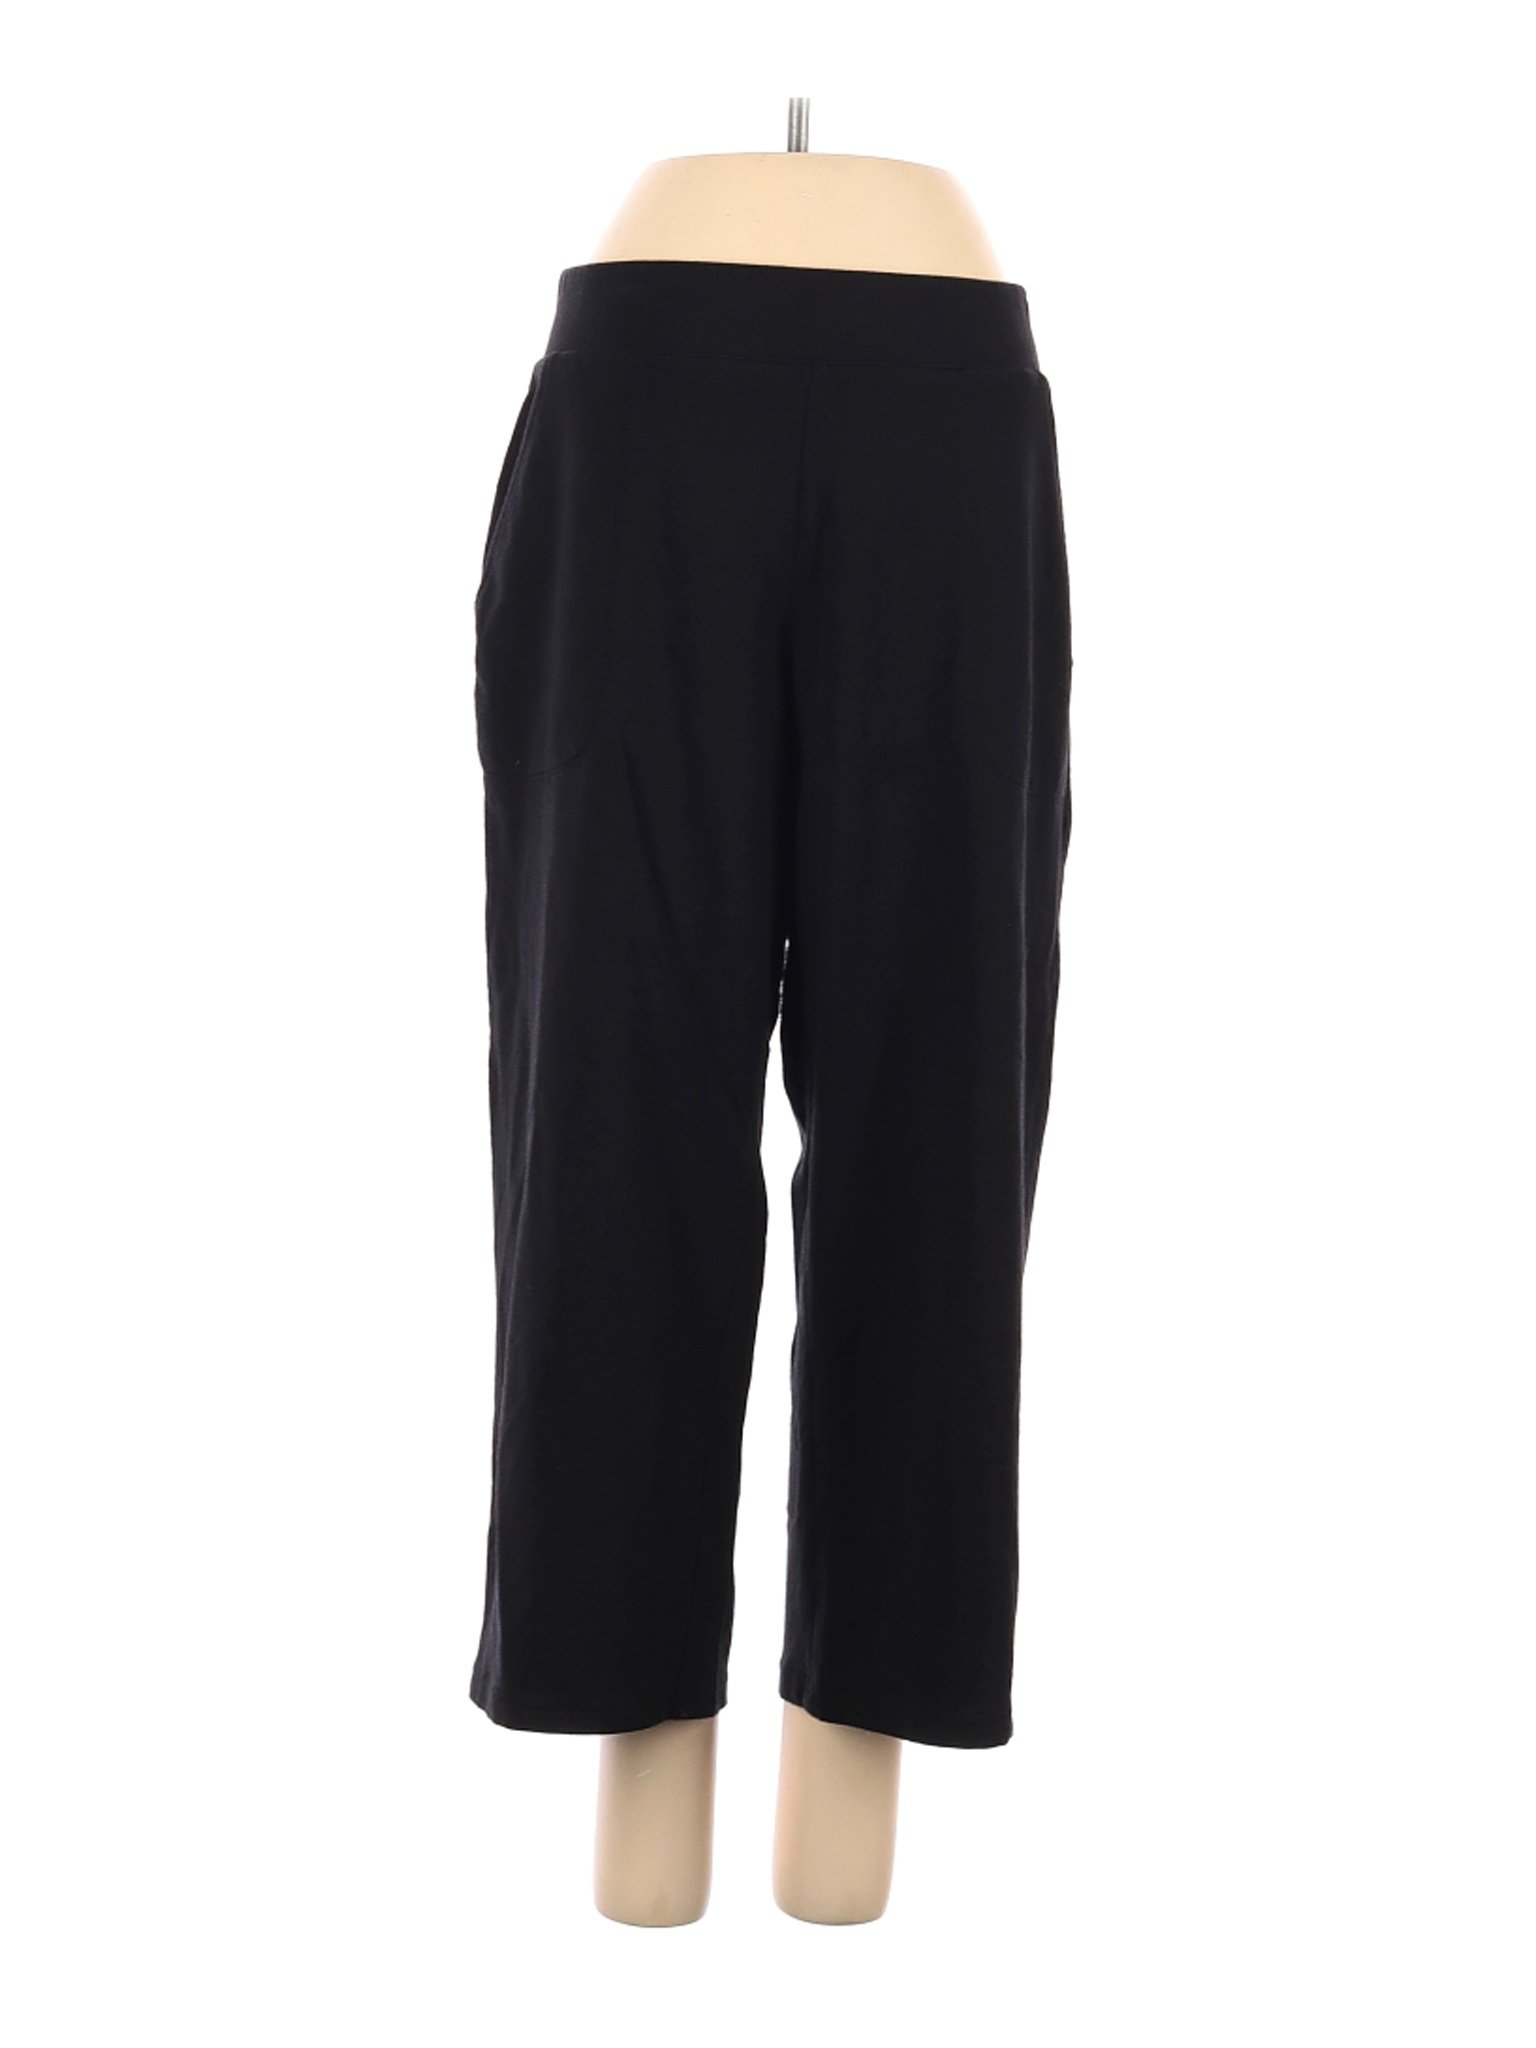 Talbots Women Black Casual Pants S | eBay